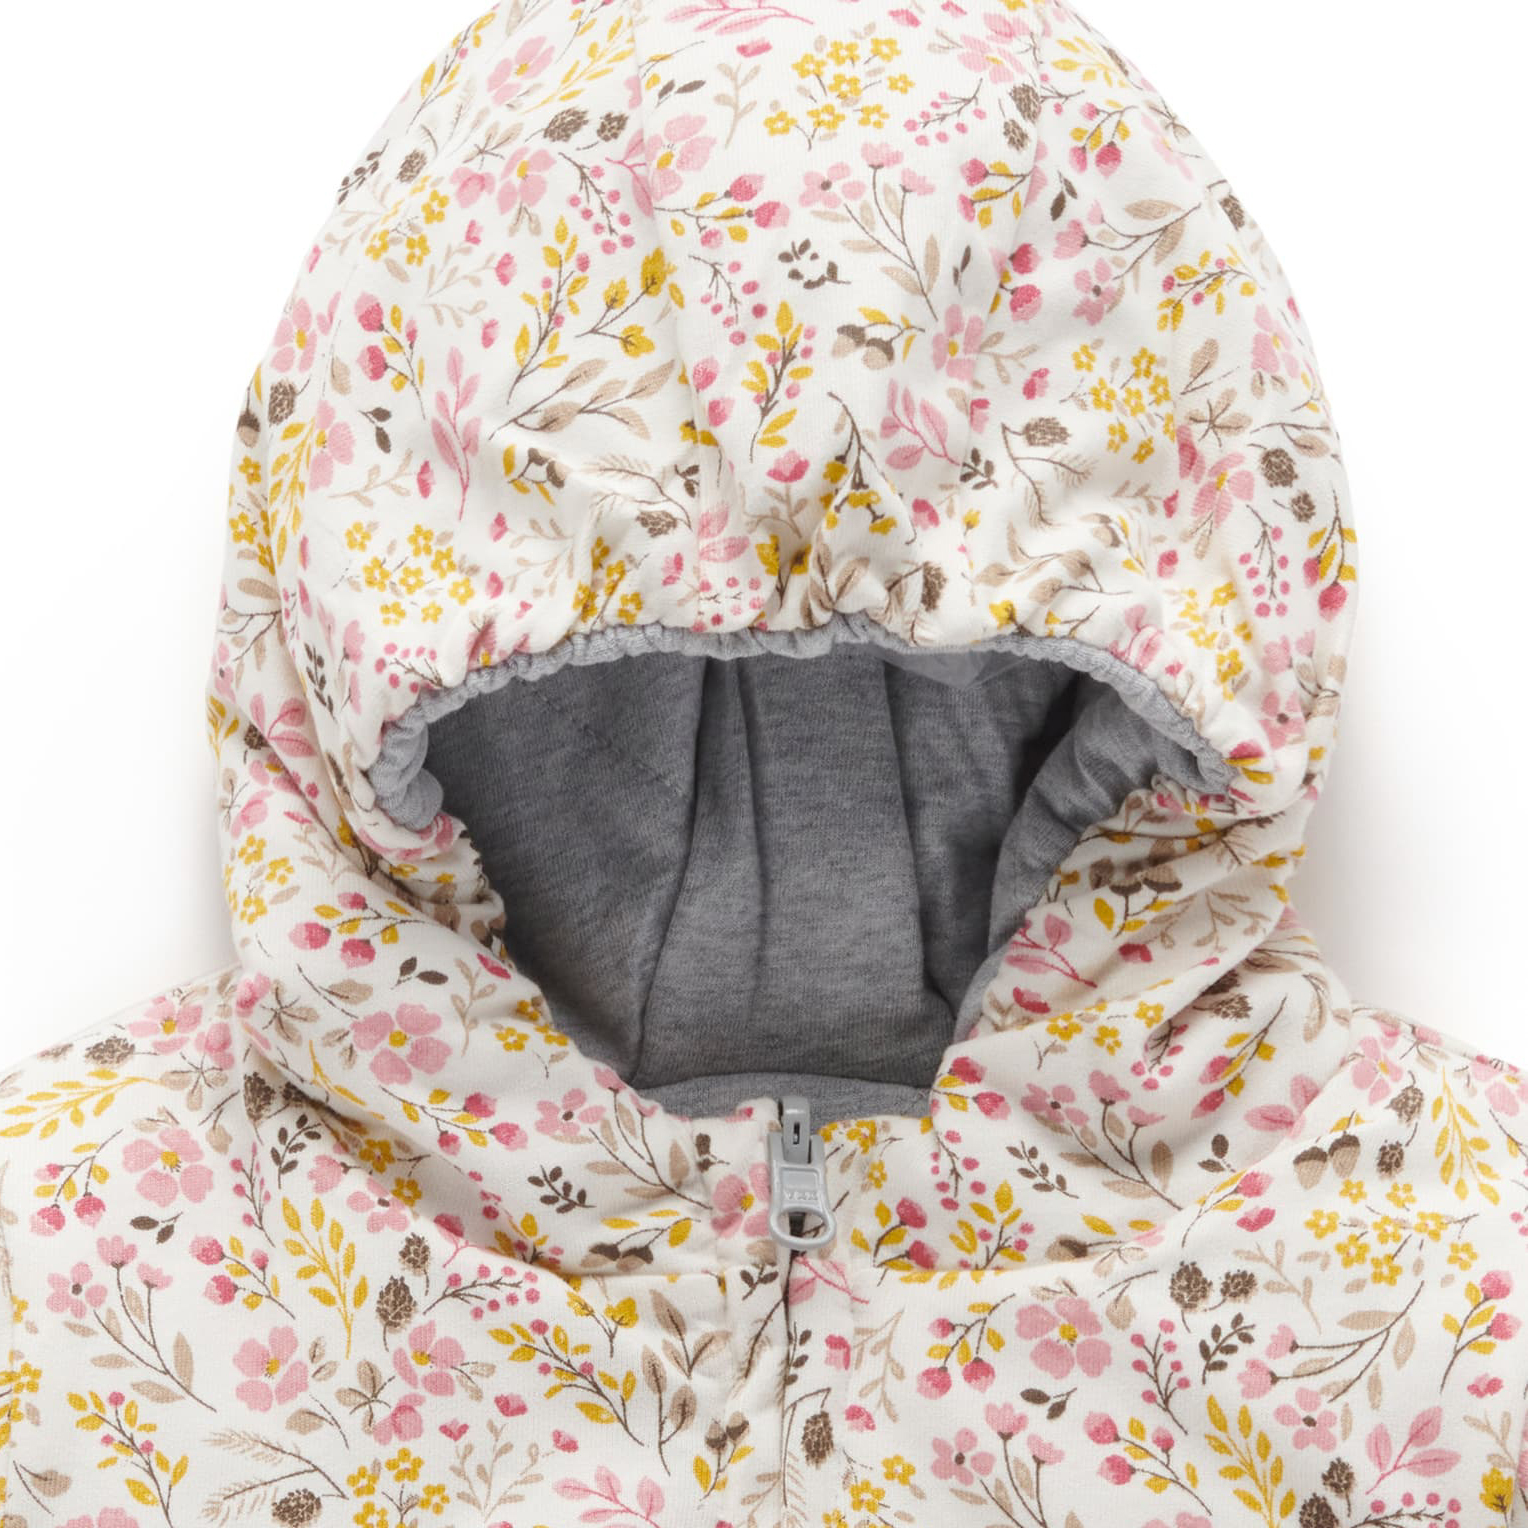 Winter floral print reversible jacket 4